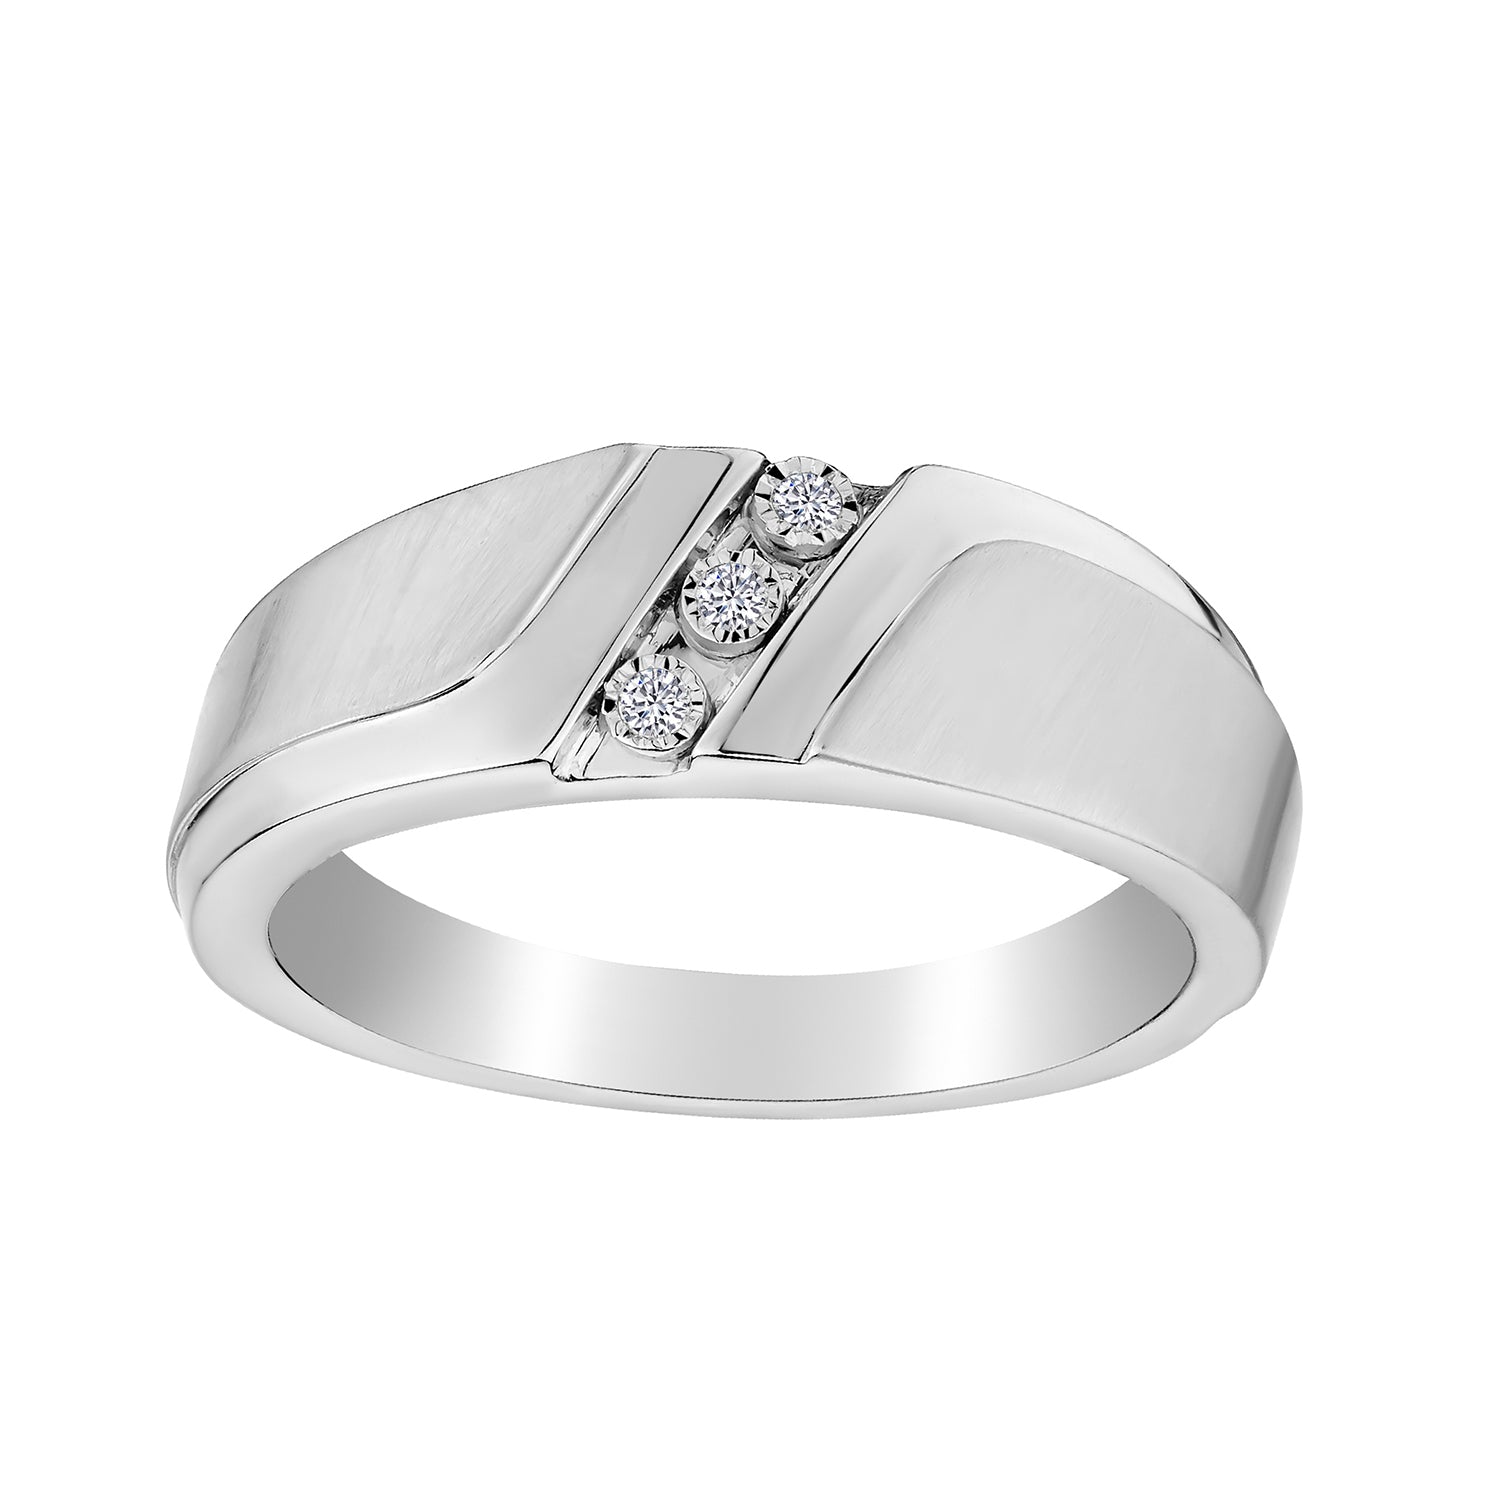 .05 Carat Diamond "Past, Present, Future" Gentleman's Ring,  10kt White Gold. Men’s Rings. Griffin Jewellery Designs. 